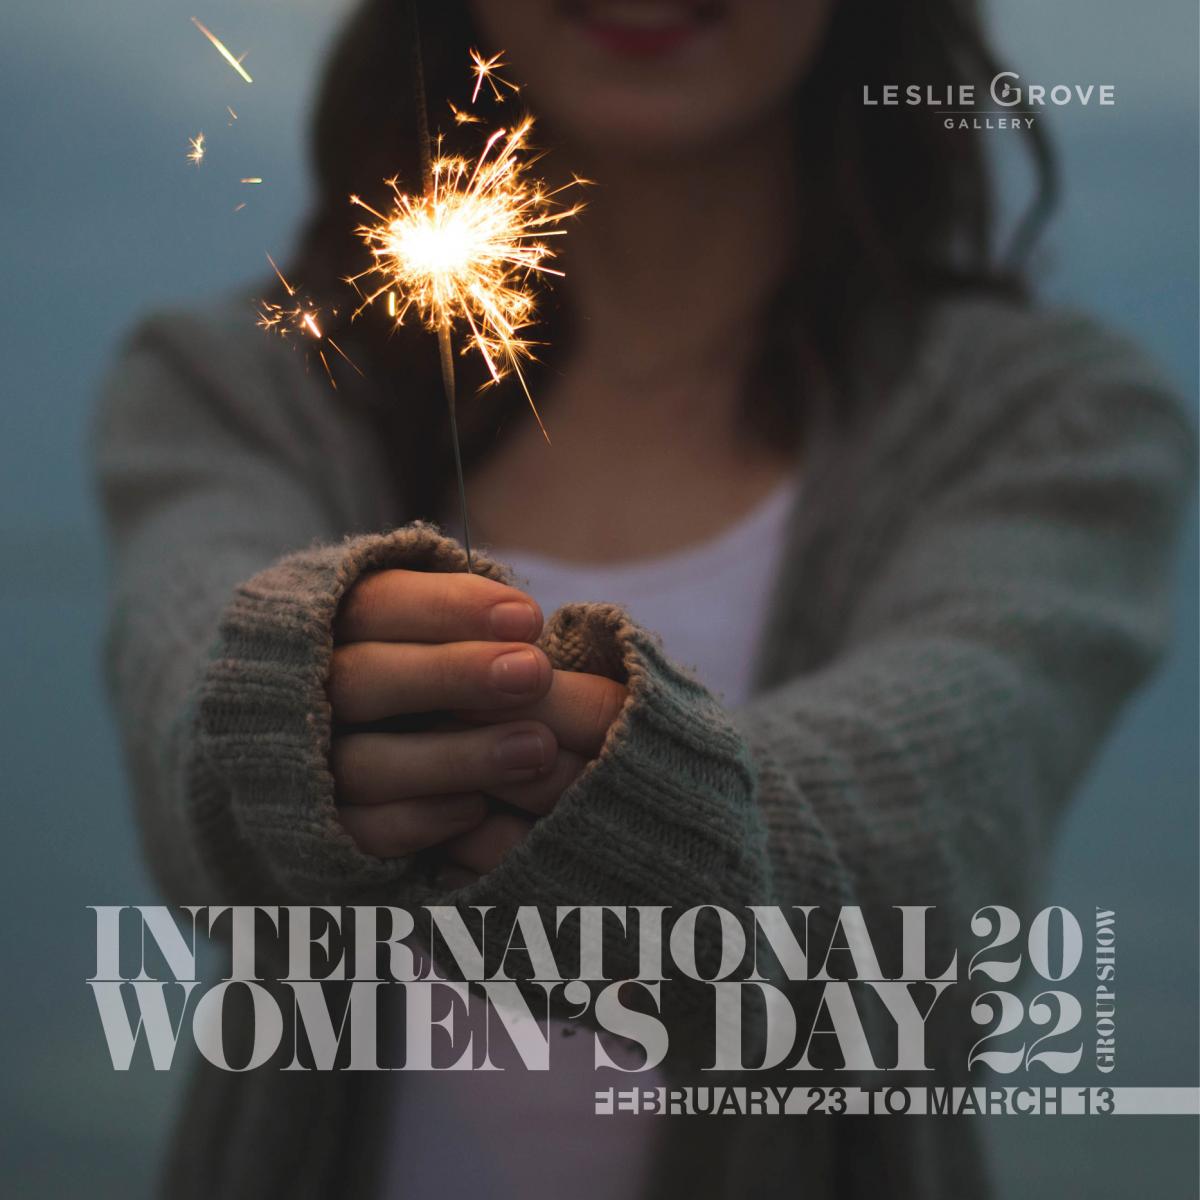 International Women’s Day 2022 Group Show